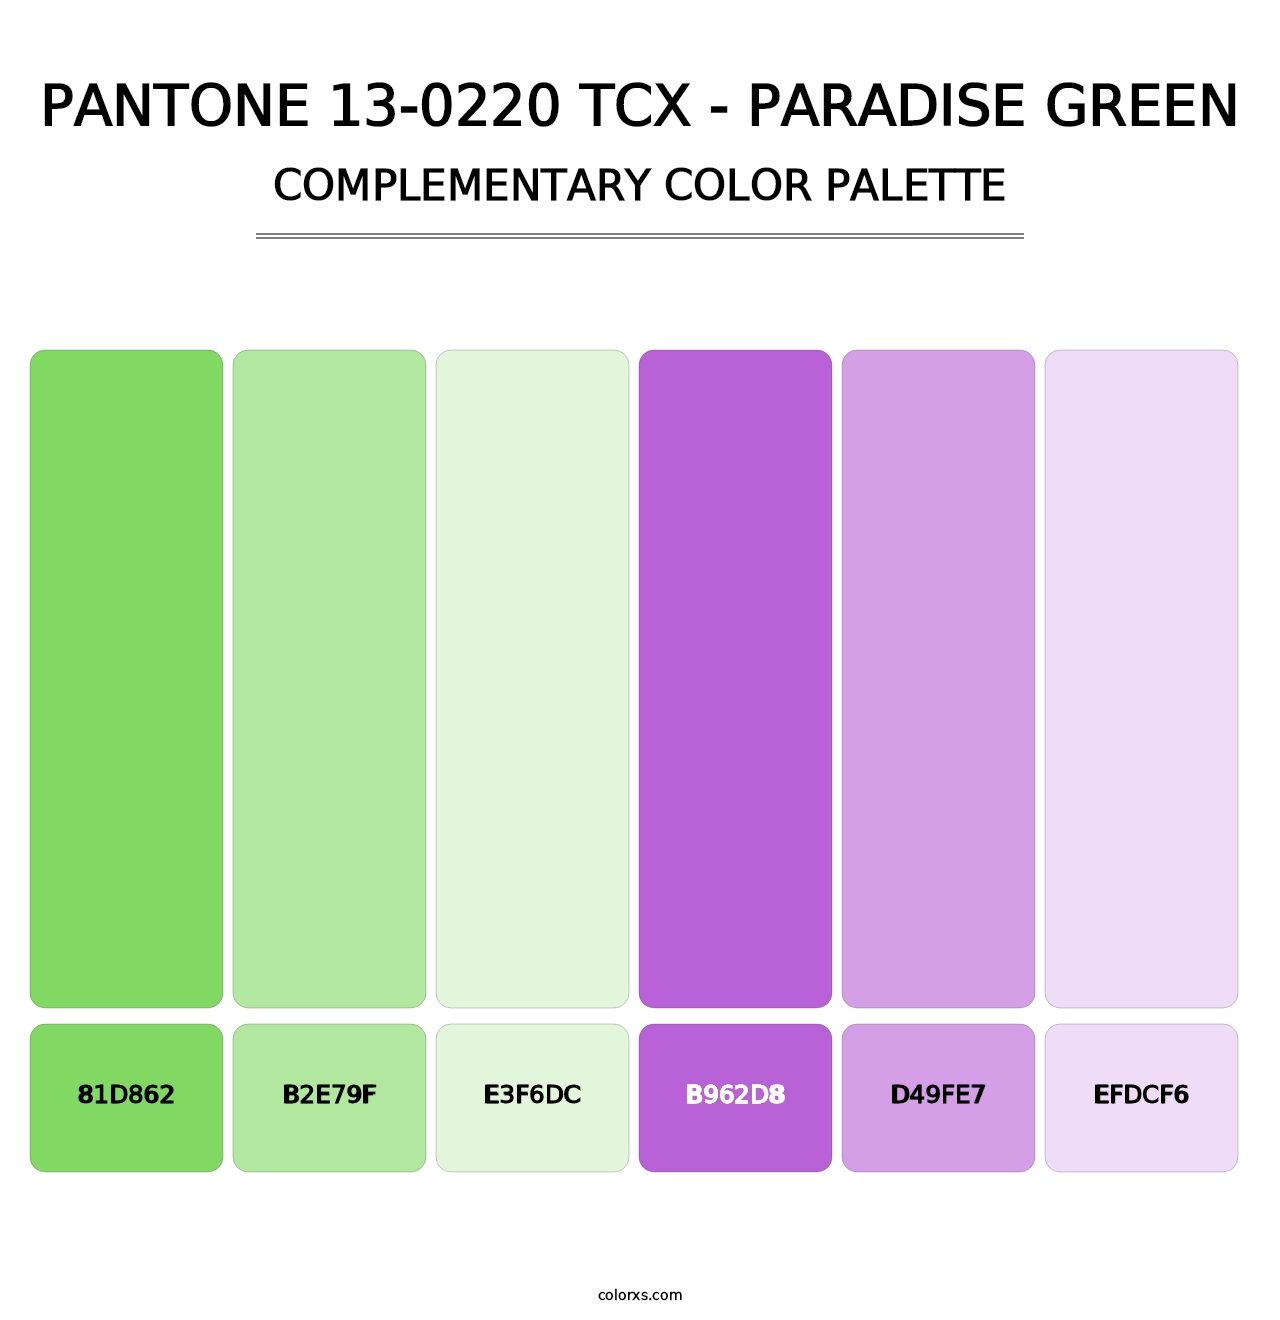 PANTONE 13-0220 TCX - Paradise Green - Complementary Color Palette